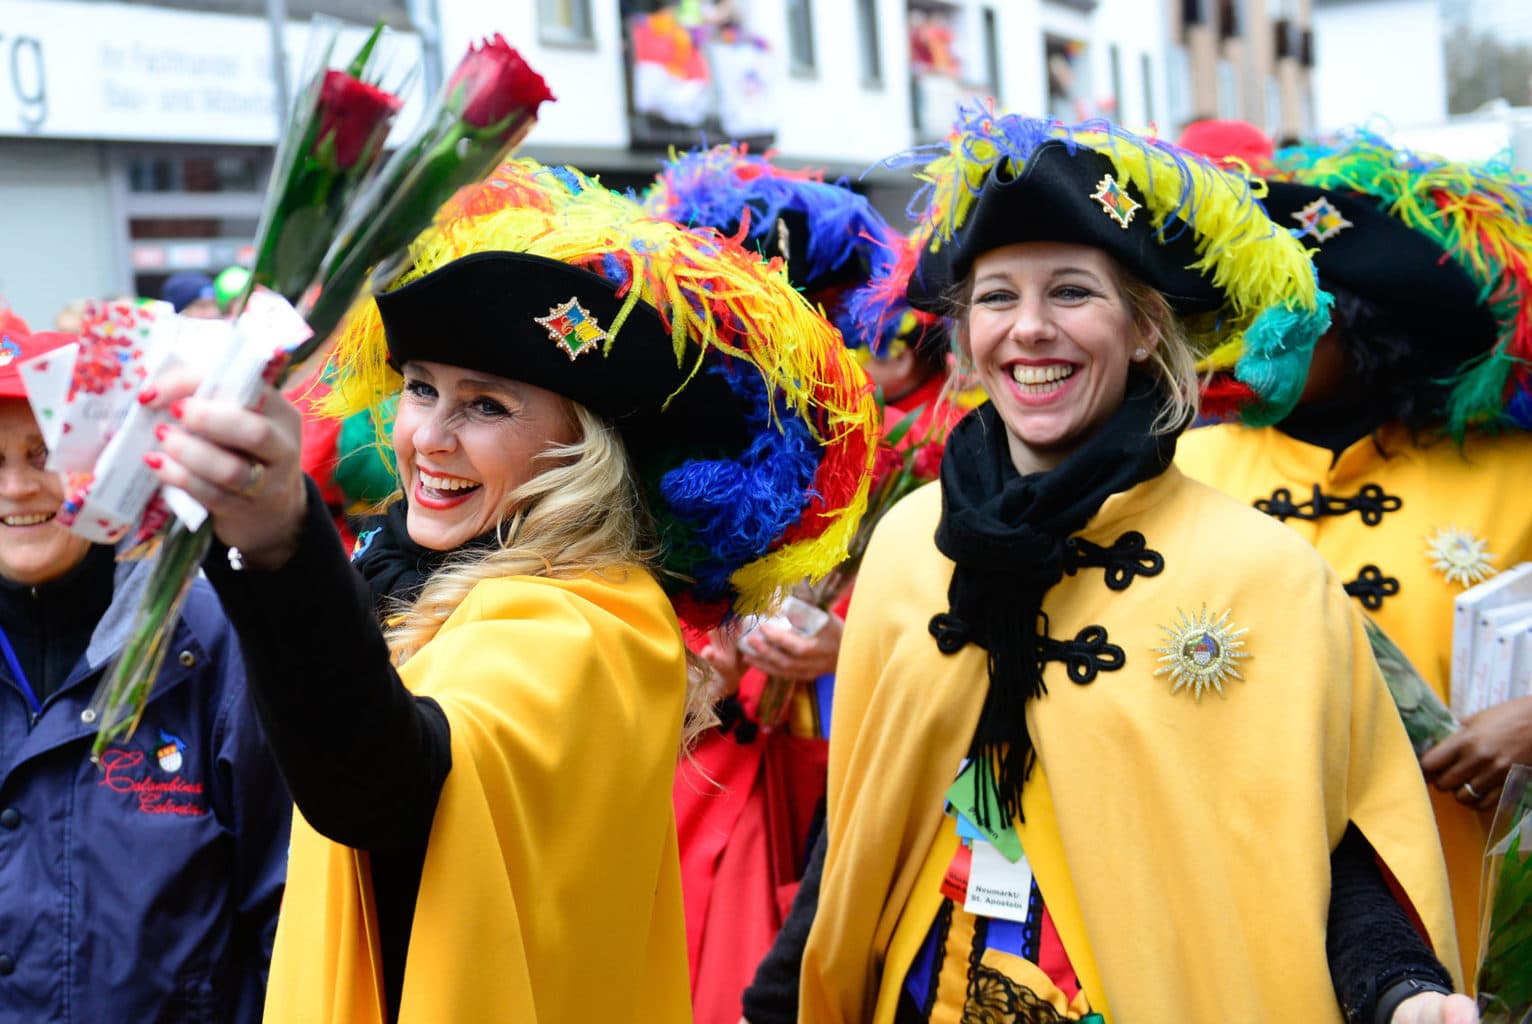 Carnaval in Keulen